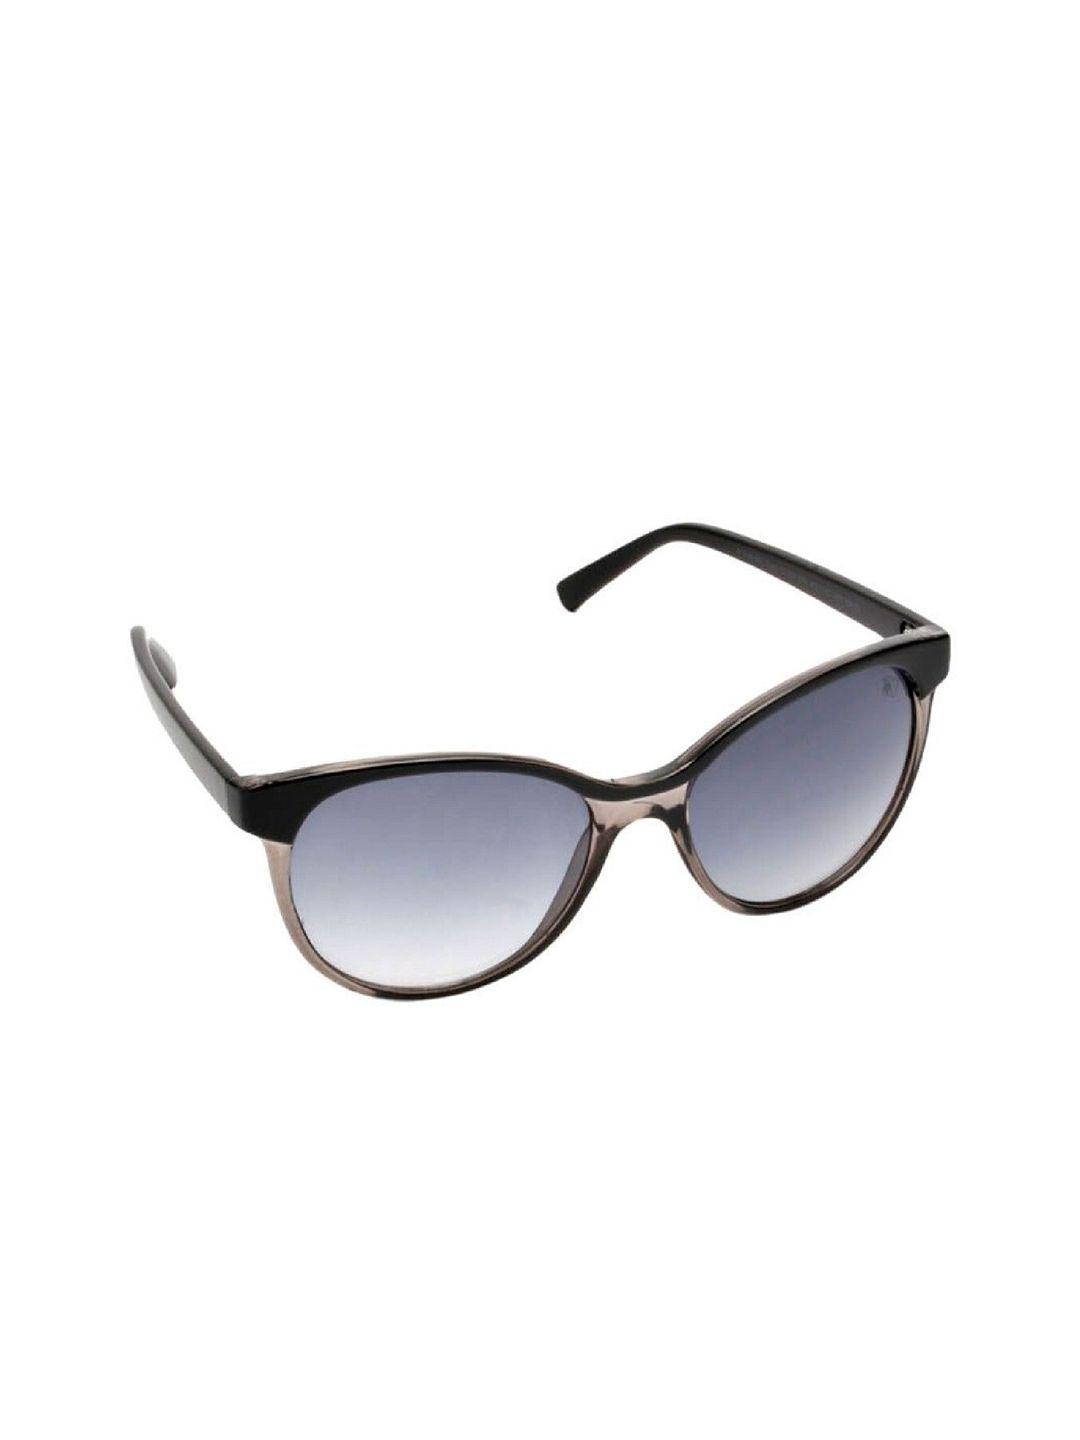 mtv unisex green lens & black cateye sunglasses with uv protected lens mtv-135-c1